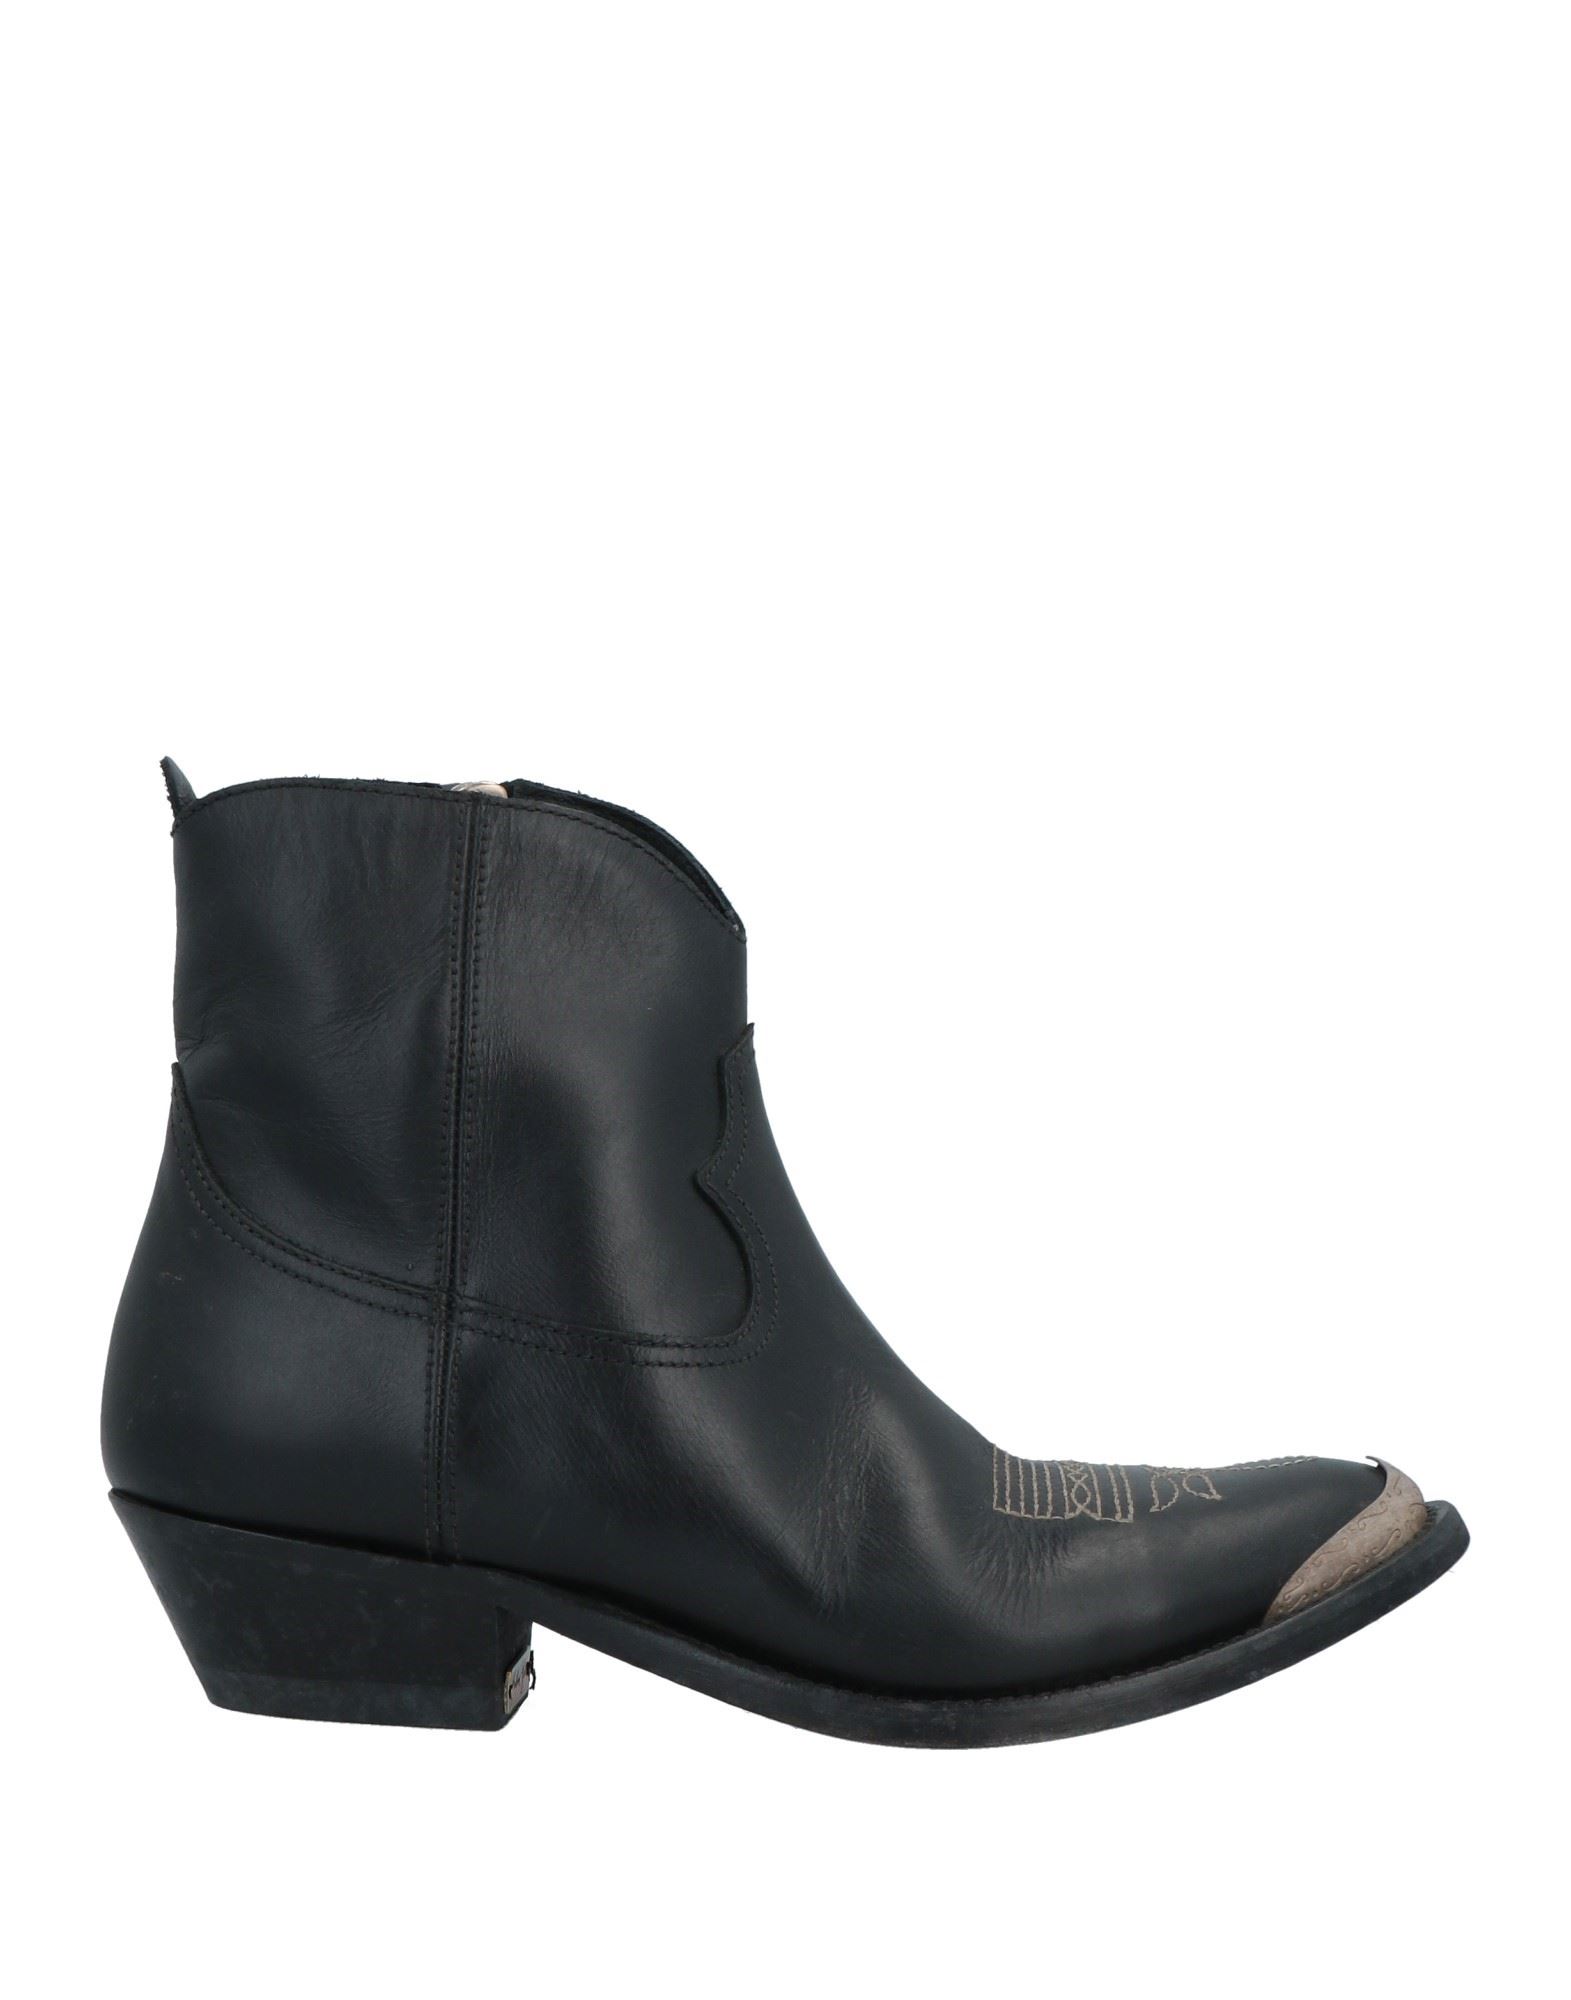 Shop Golden Goose Woman Ankle Boots Black Size 6 Leather